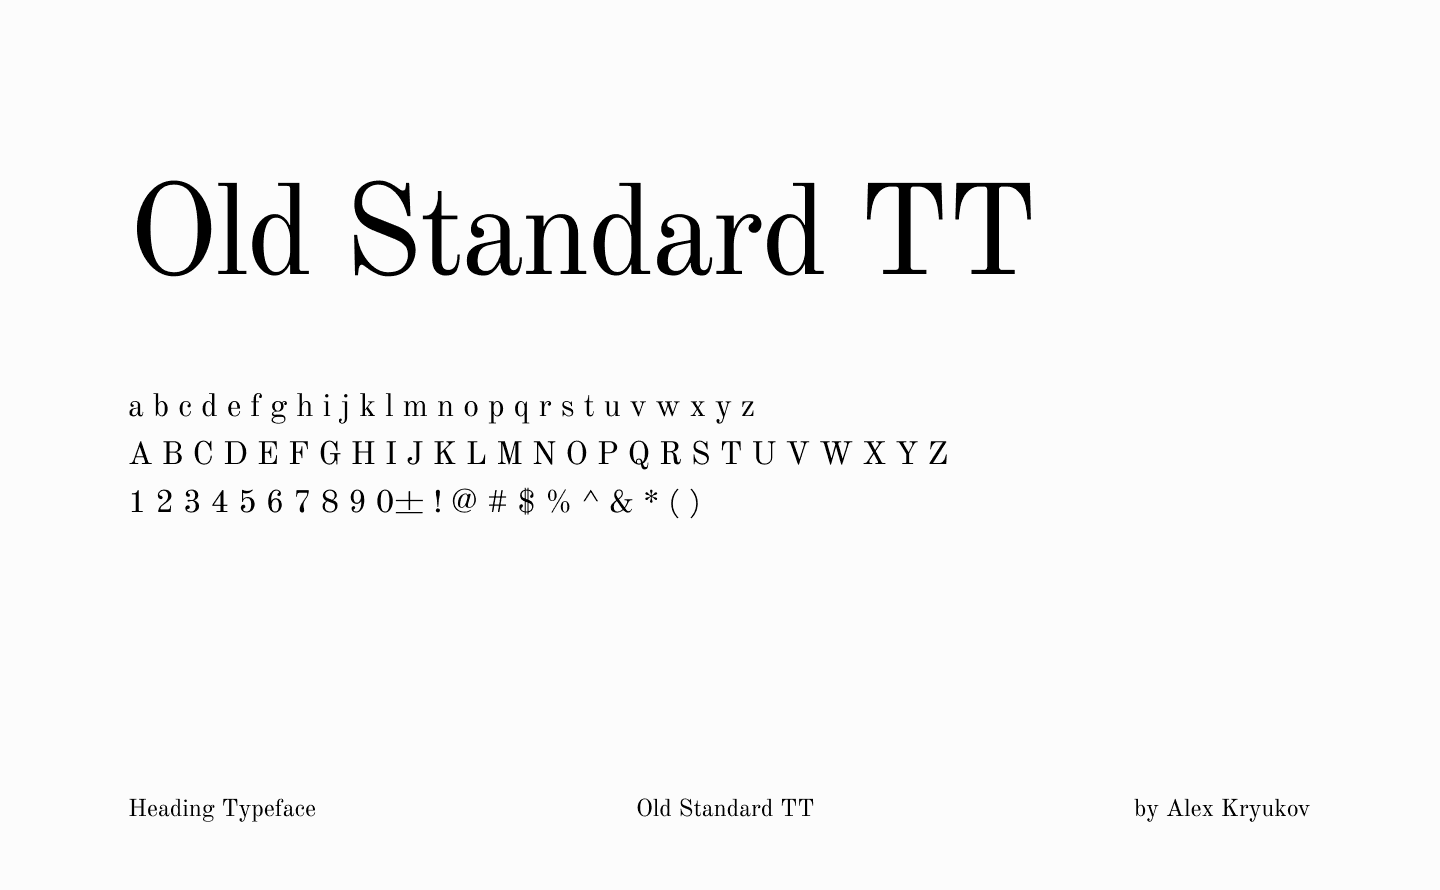 Old Standard TT - headings